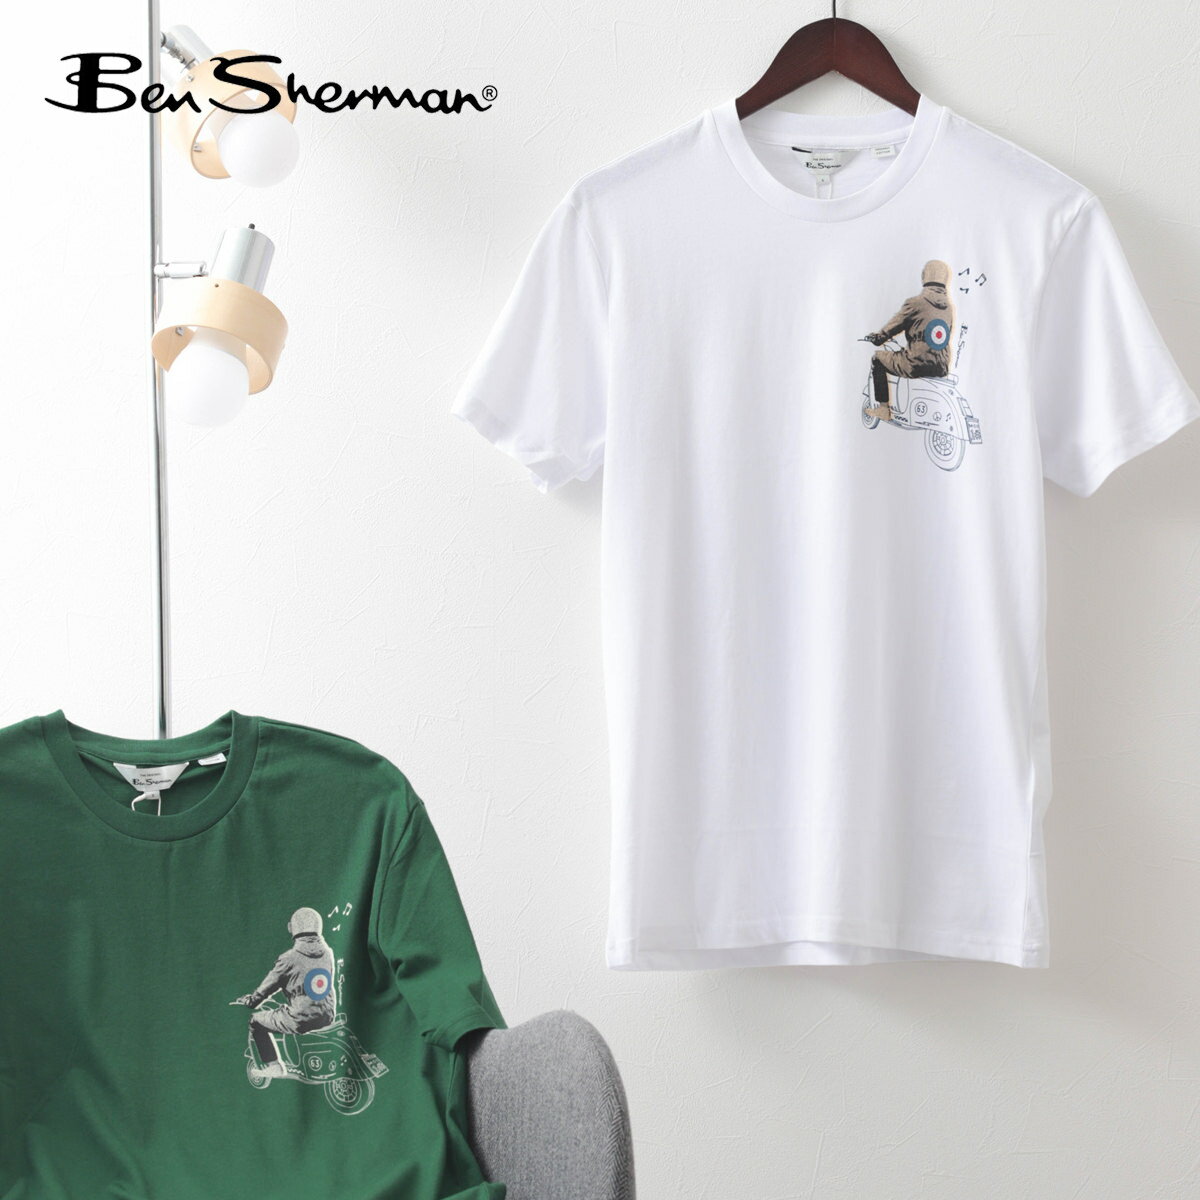 Ben Sherman ベンシャーマン メンズ Tシャツ ドゥードゥルプリント 2色 グリーン ホワイト オーガニックコットン ターゲットマーク 半袖 レギュラーフィット クルーネック ギフト トラッド